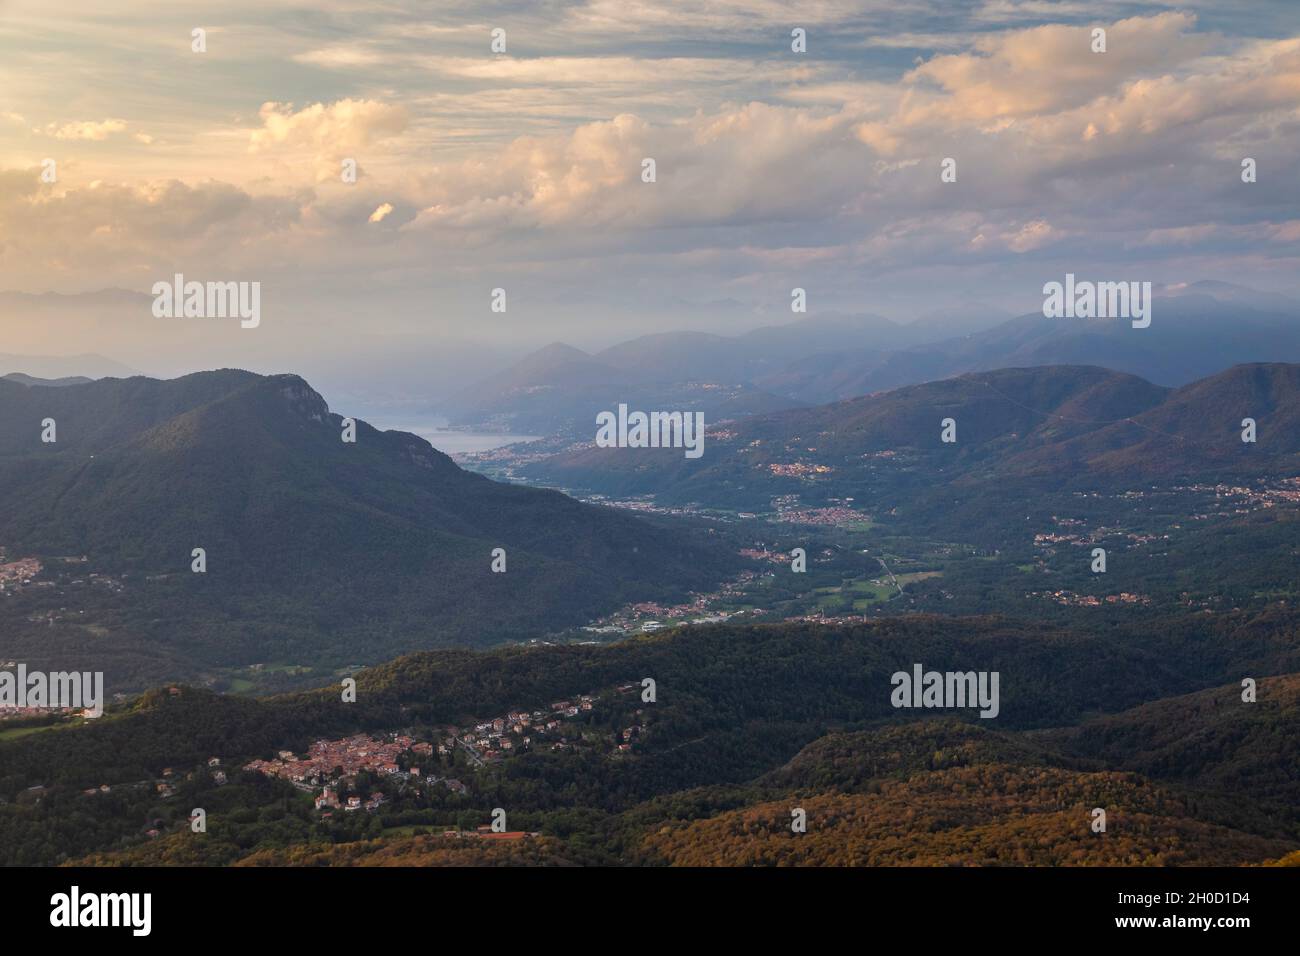 Blick auf die Umgebung von Campo dei Fiori vom Aussichtspunkt von Punta di Mezzo bei Sonnenuntergang. Campo dei Fiori, Varese, Lombardei, Italien. Stockfoto